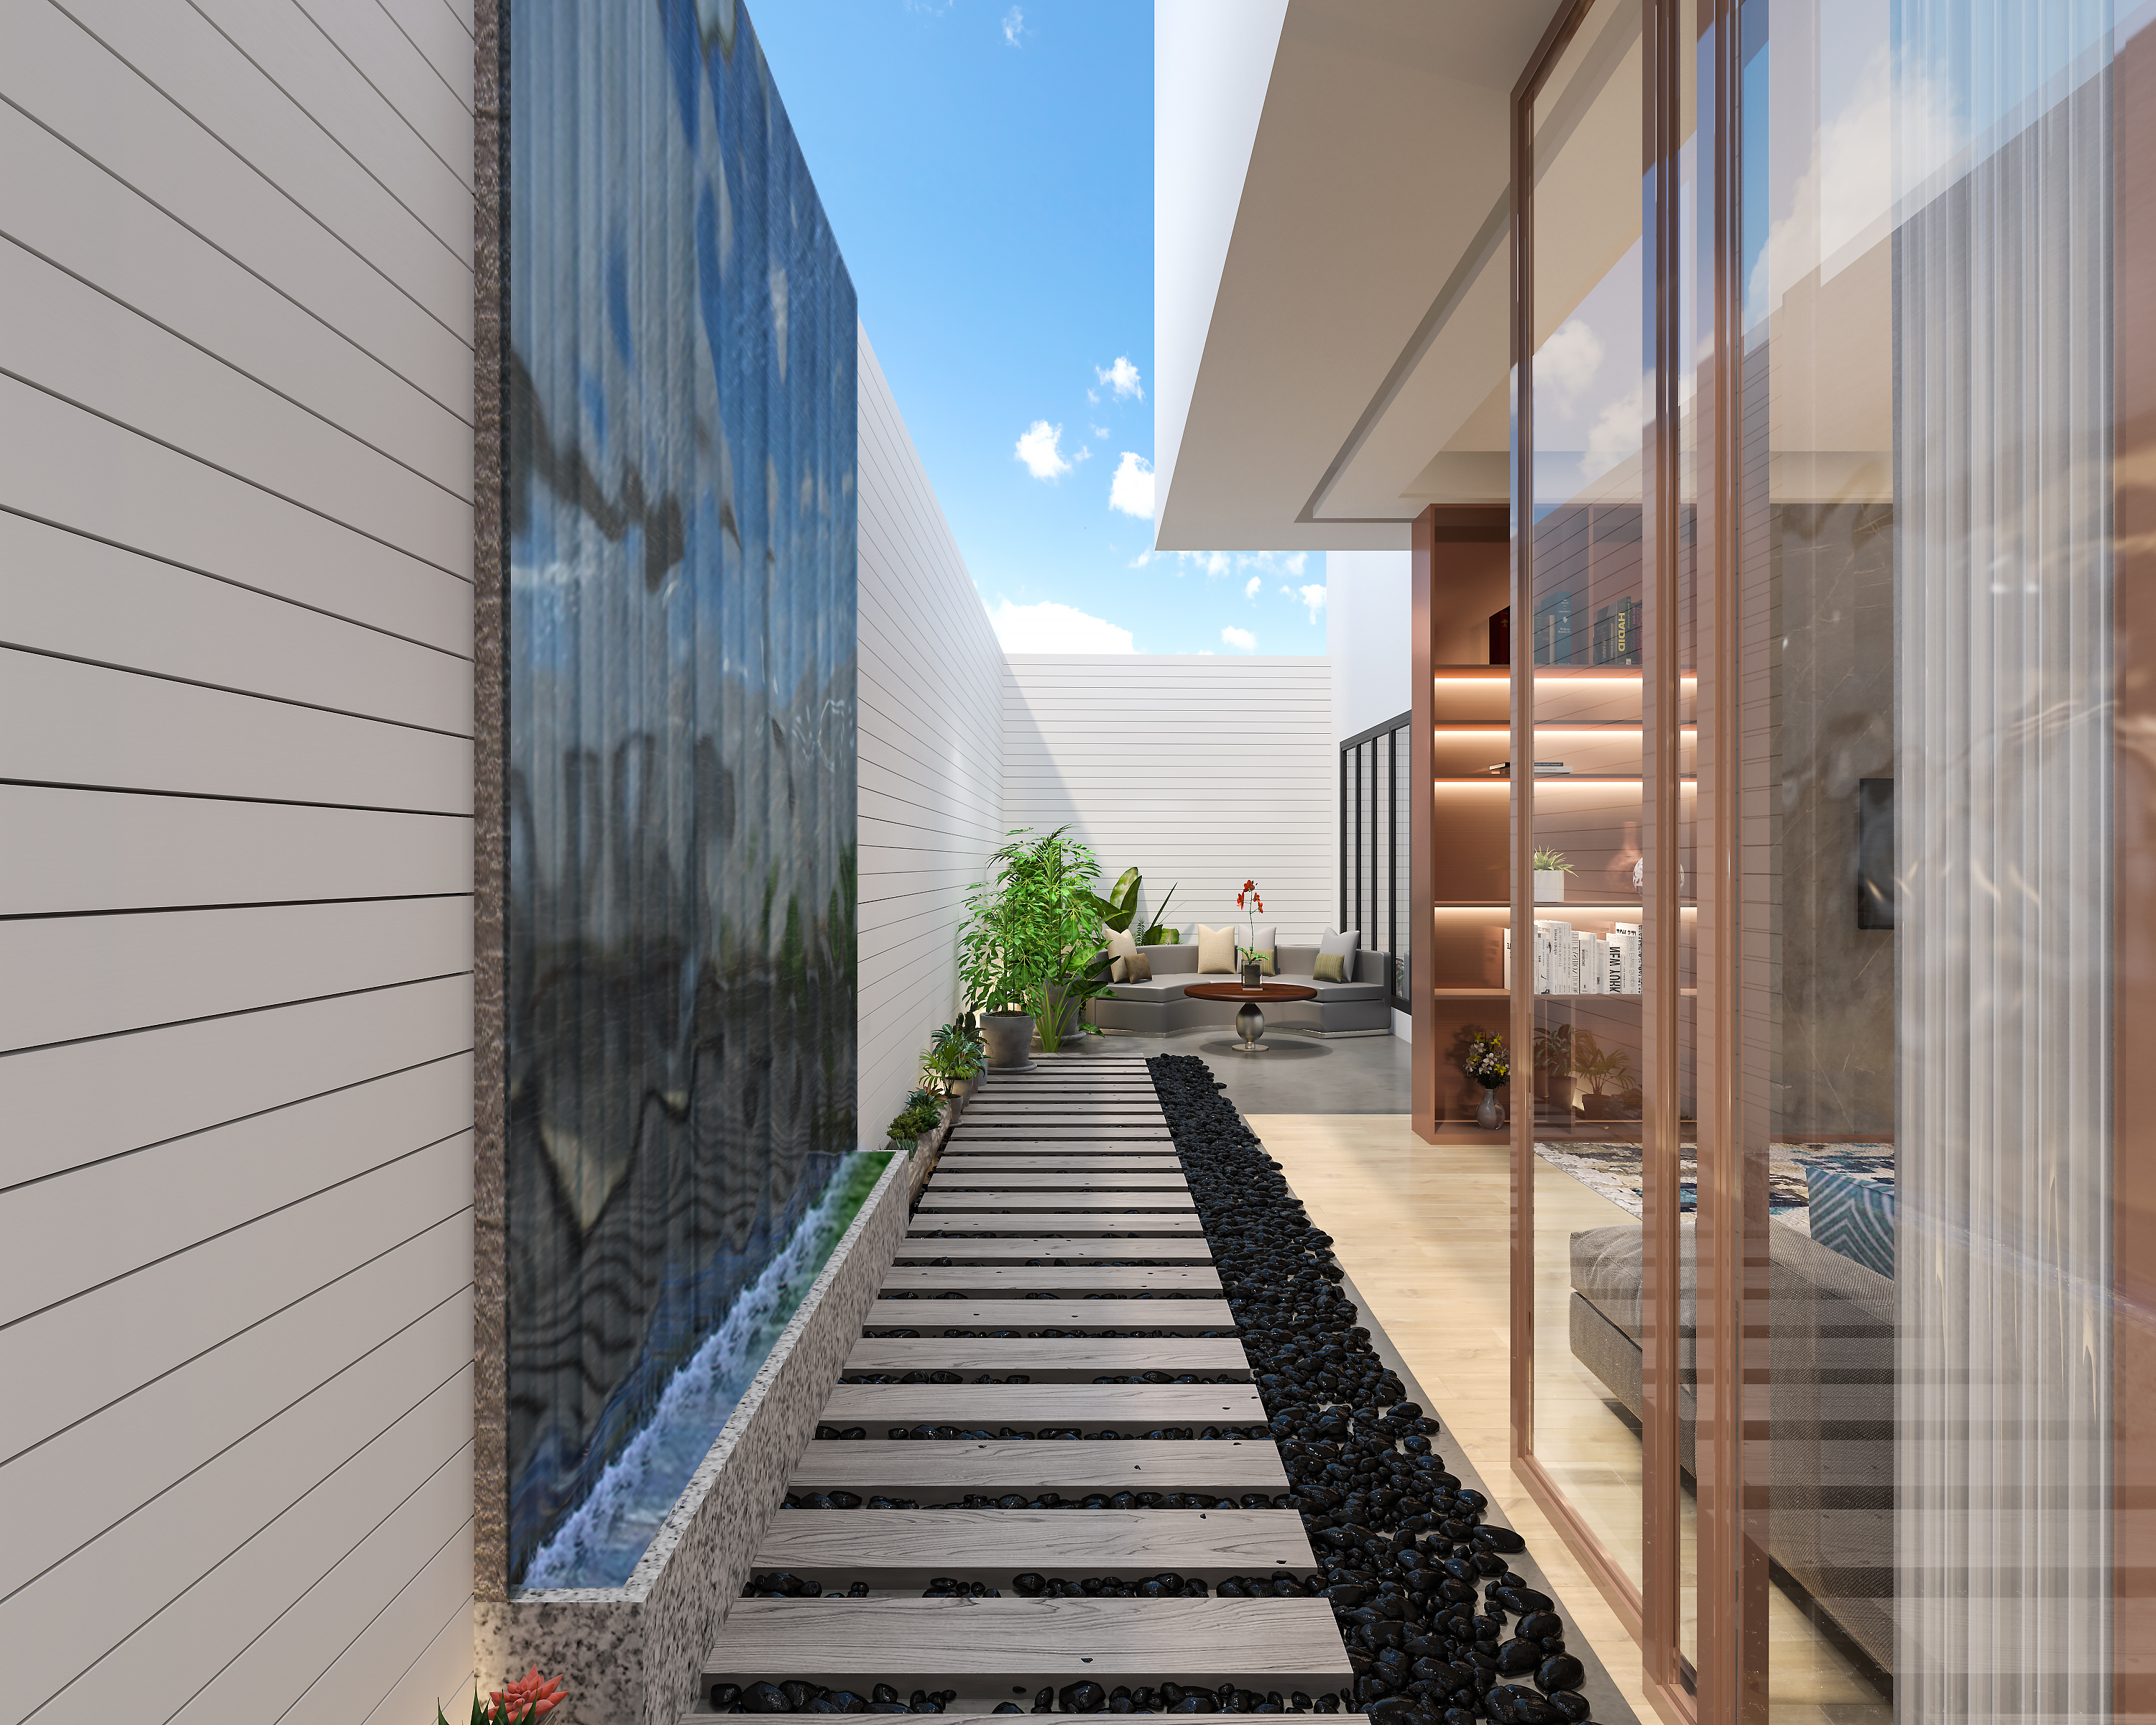 設計師Yeung Sze Man, Blair工作紀錄: 2400 s.f. modern residential interior design 